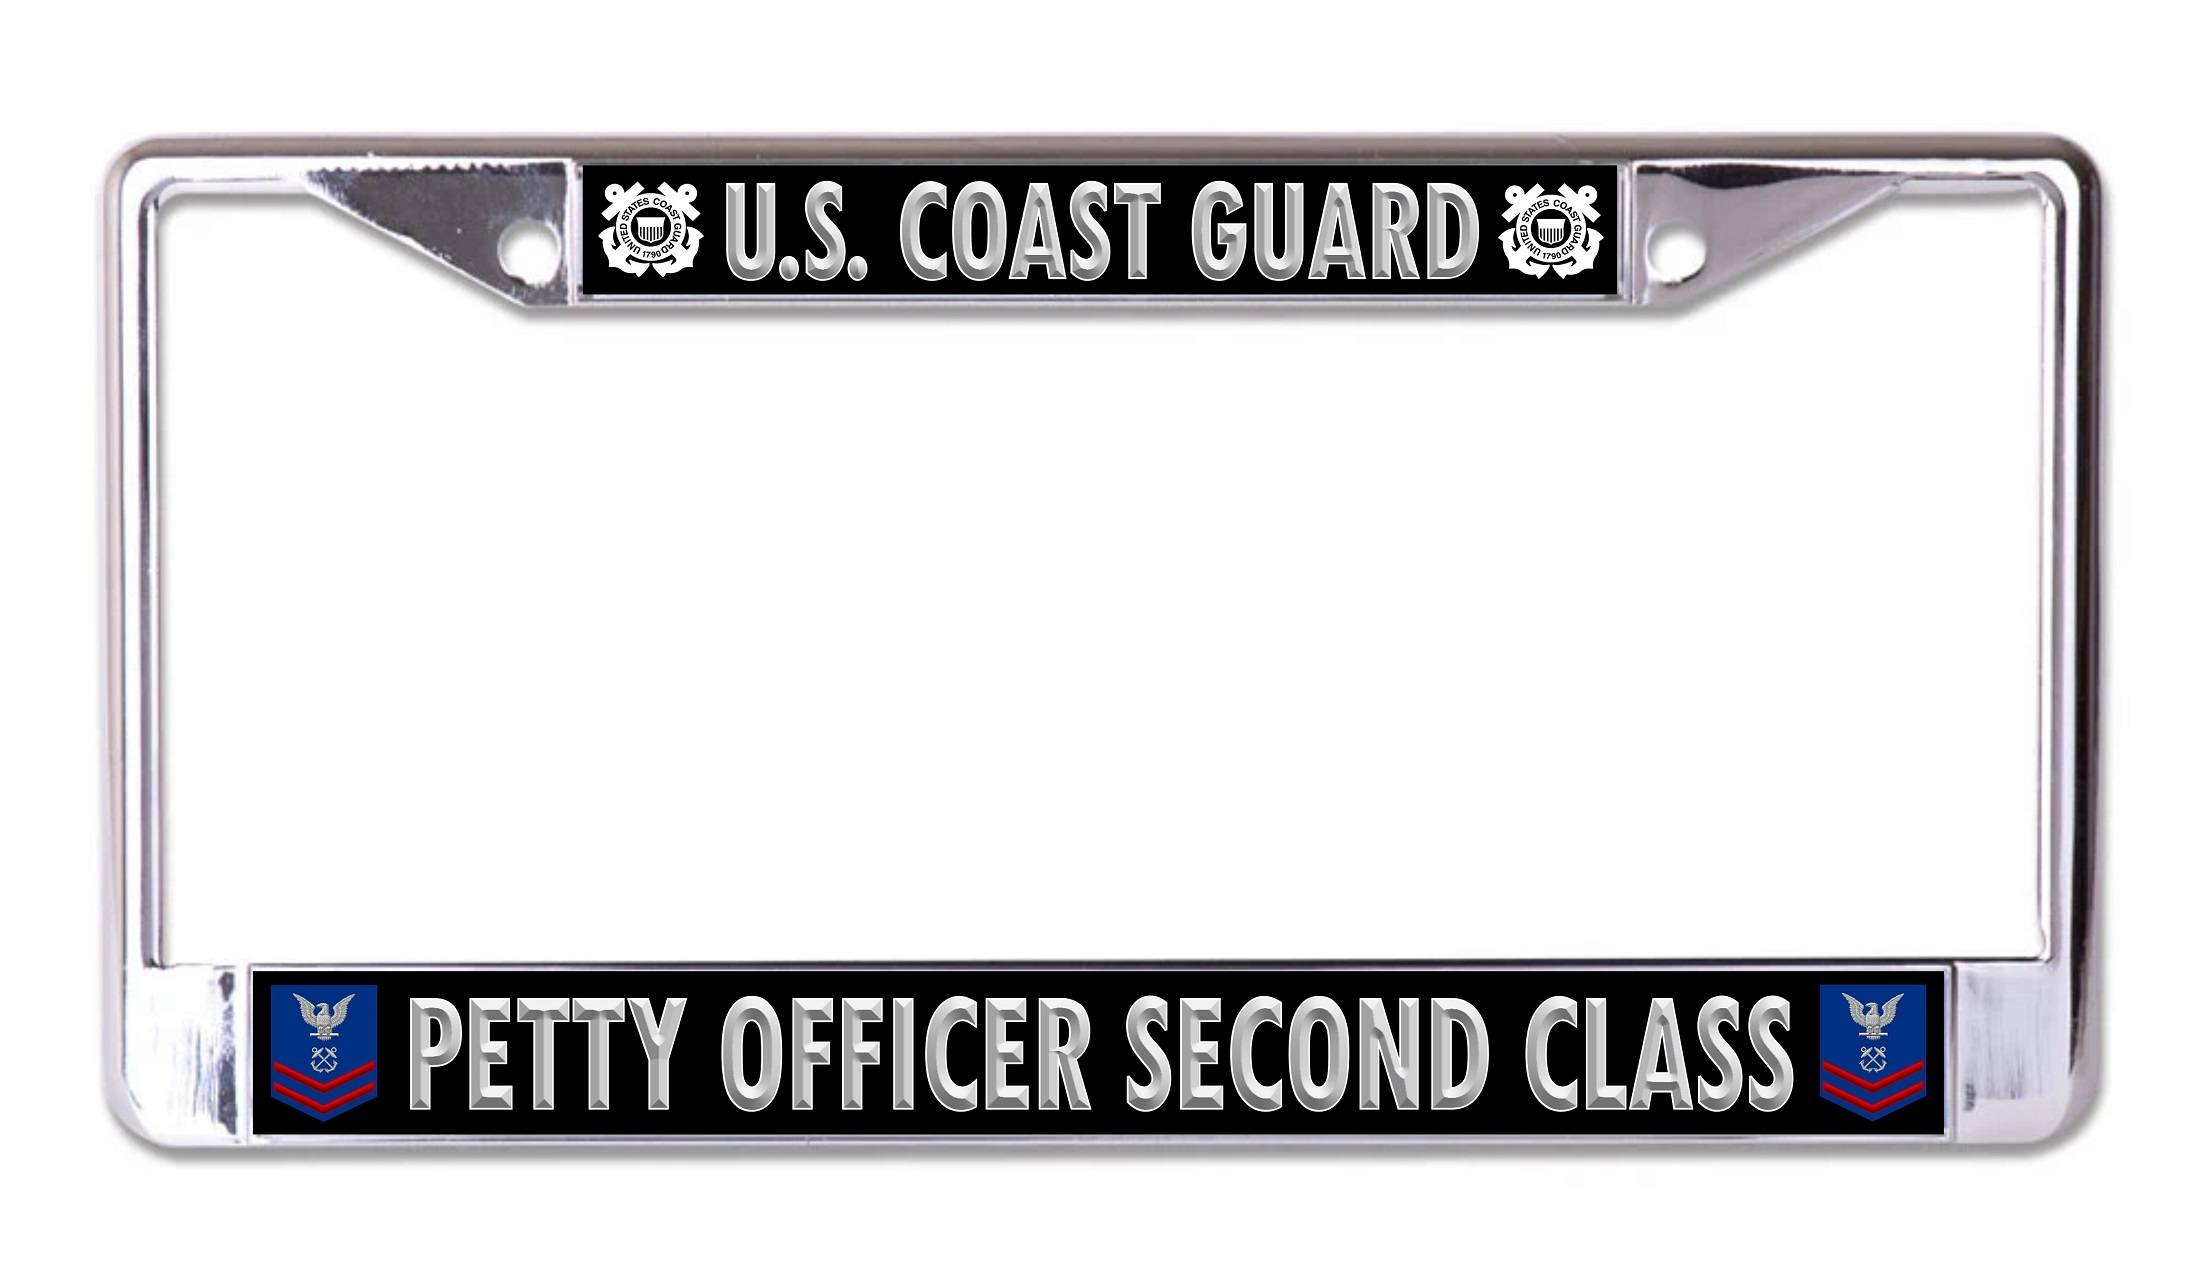 U.S. Coast Guard Petty Officer Second Class Chrome LICENSE PLATE Frame